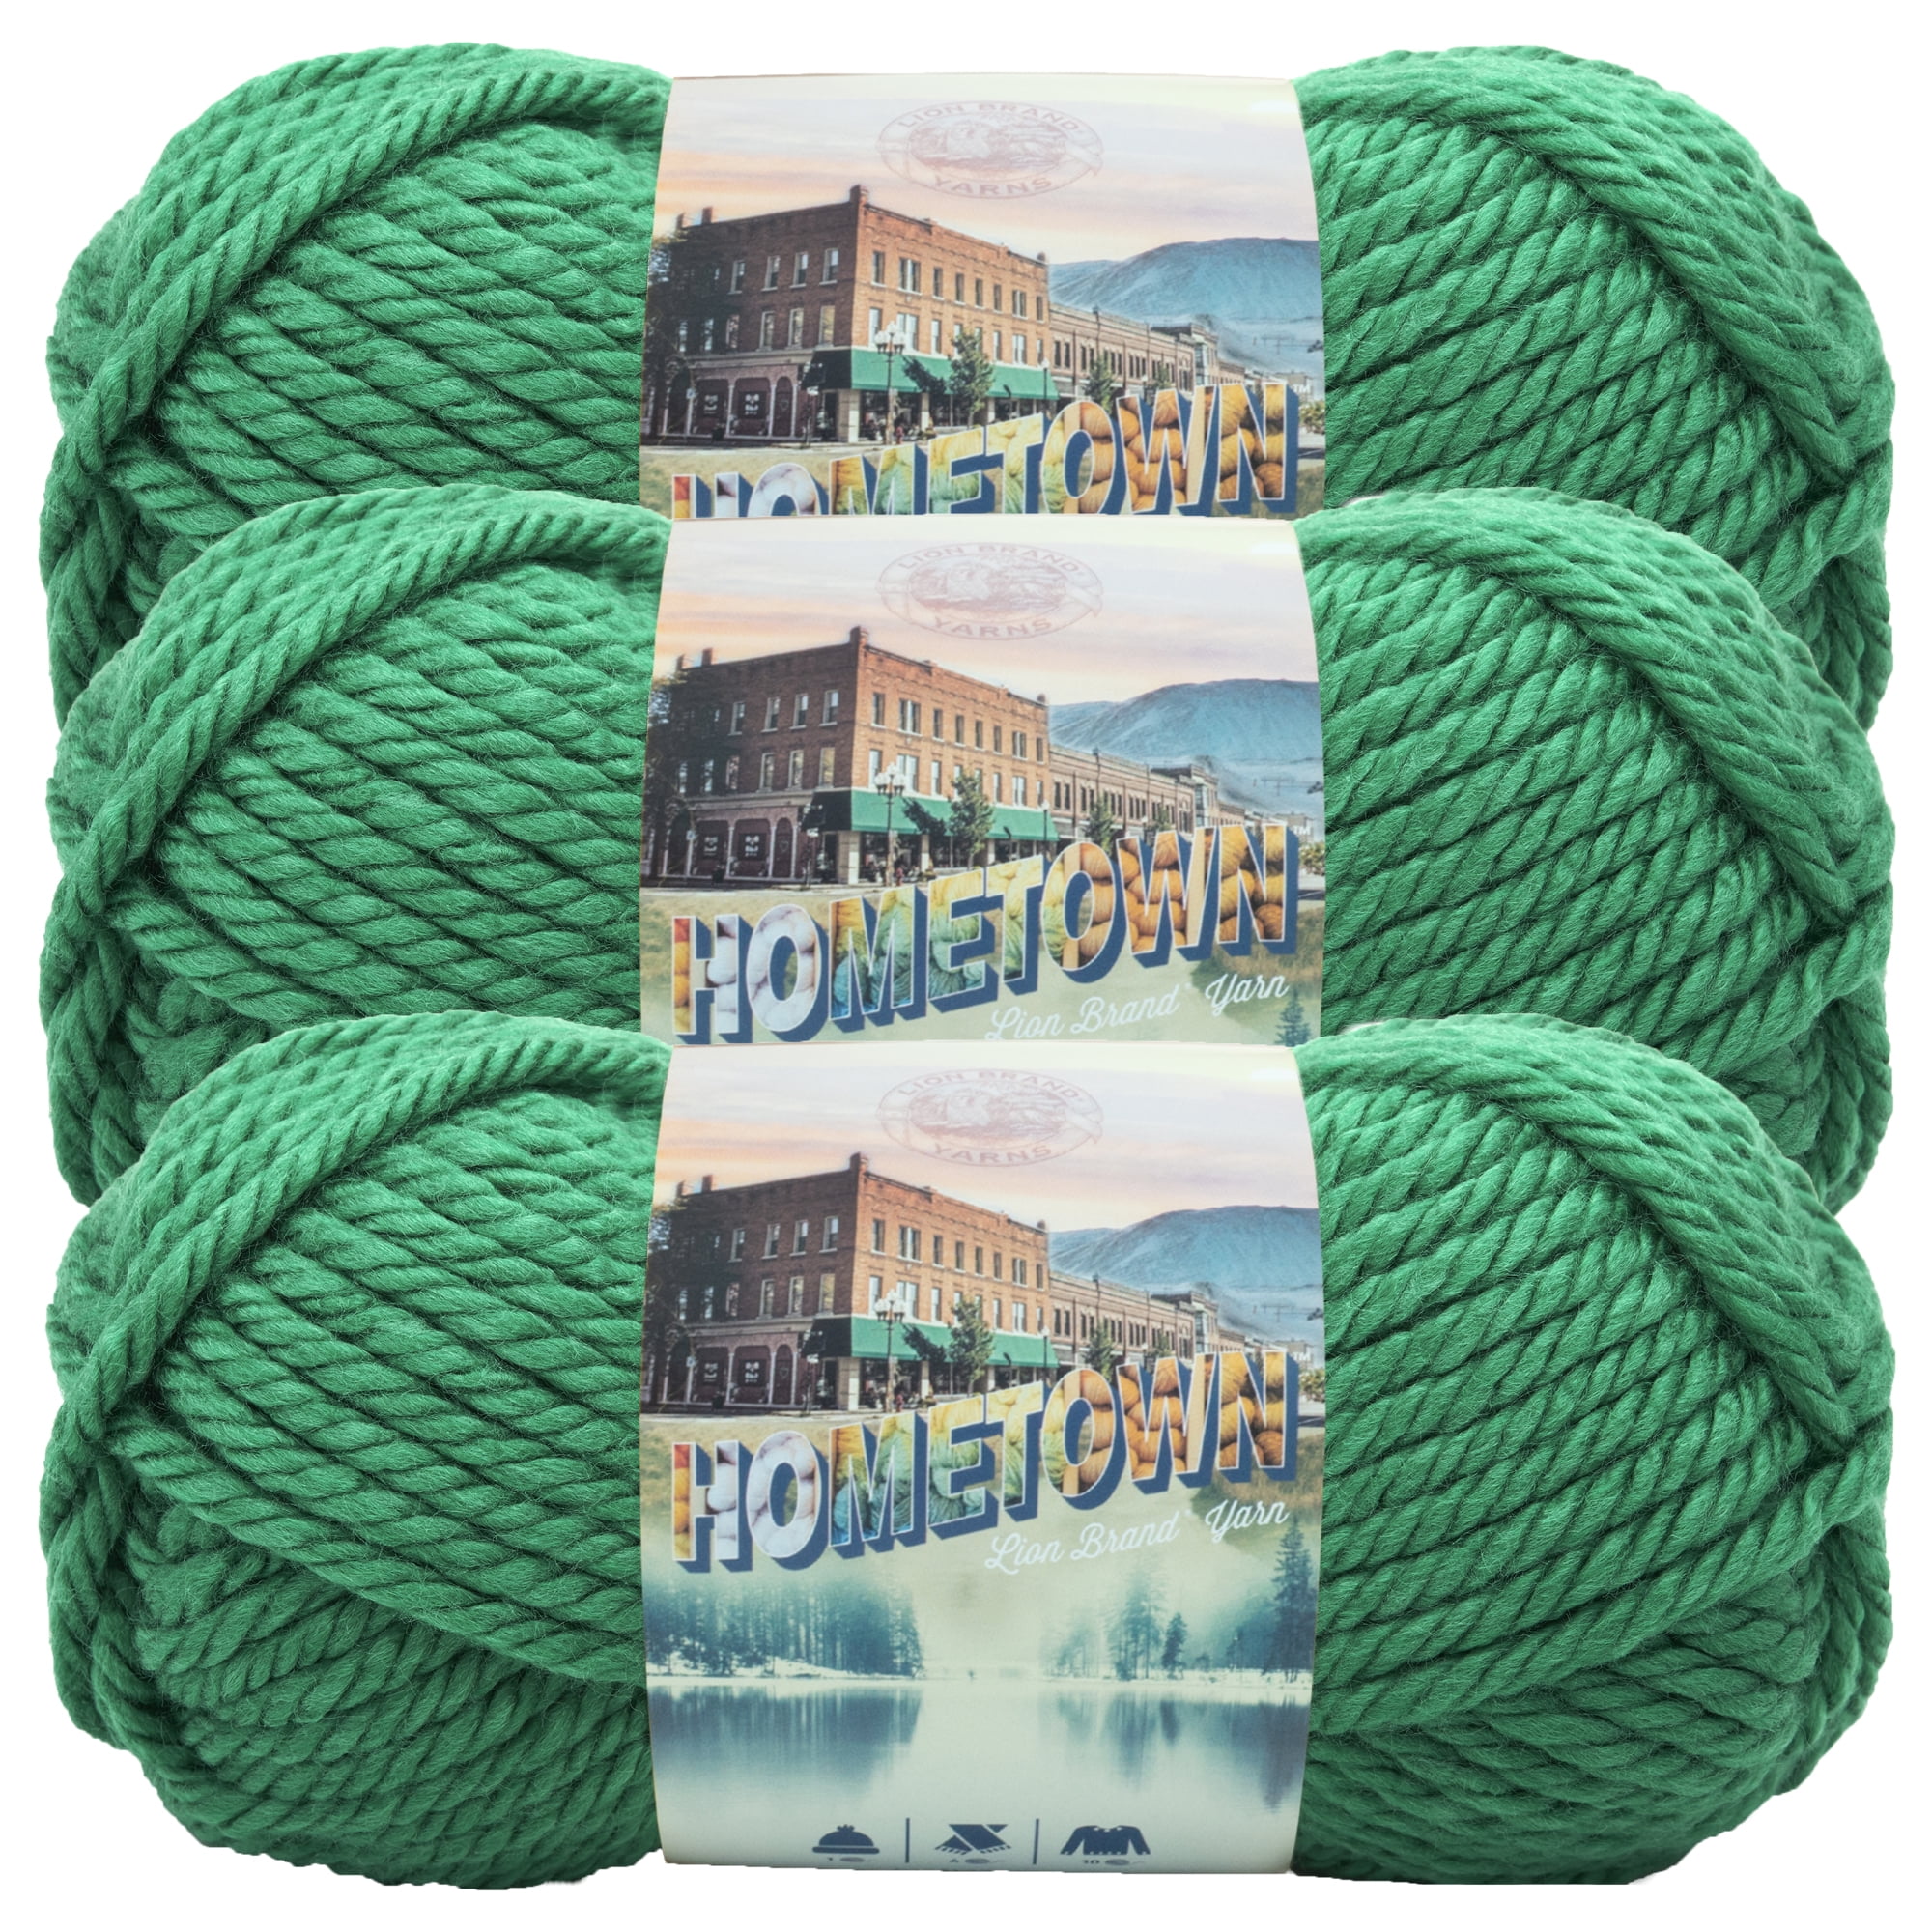 Lion Brand Yarn Hometown Hoboken Honey Basic Super Bulky Acrylic Brown Yarn  3 Pack 